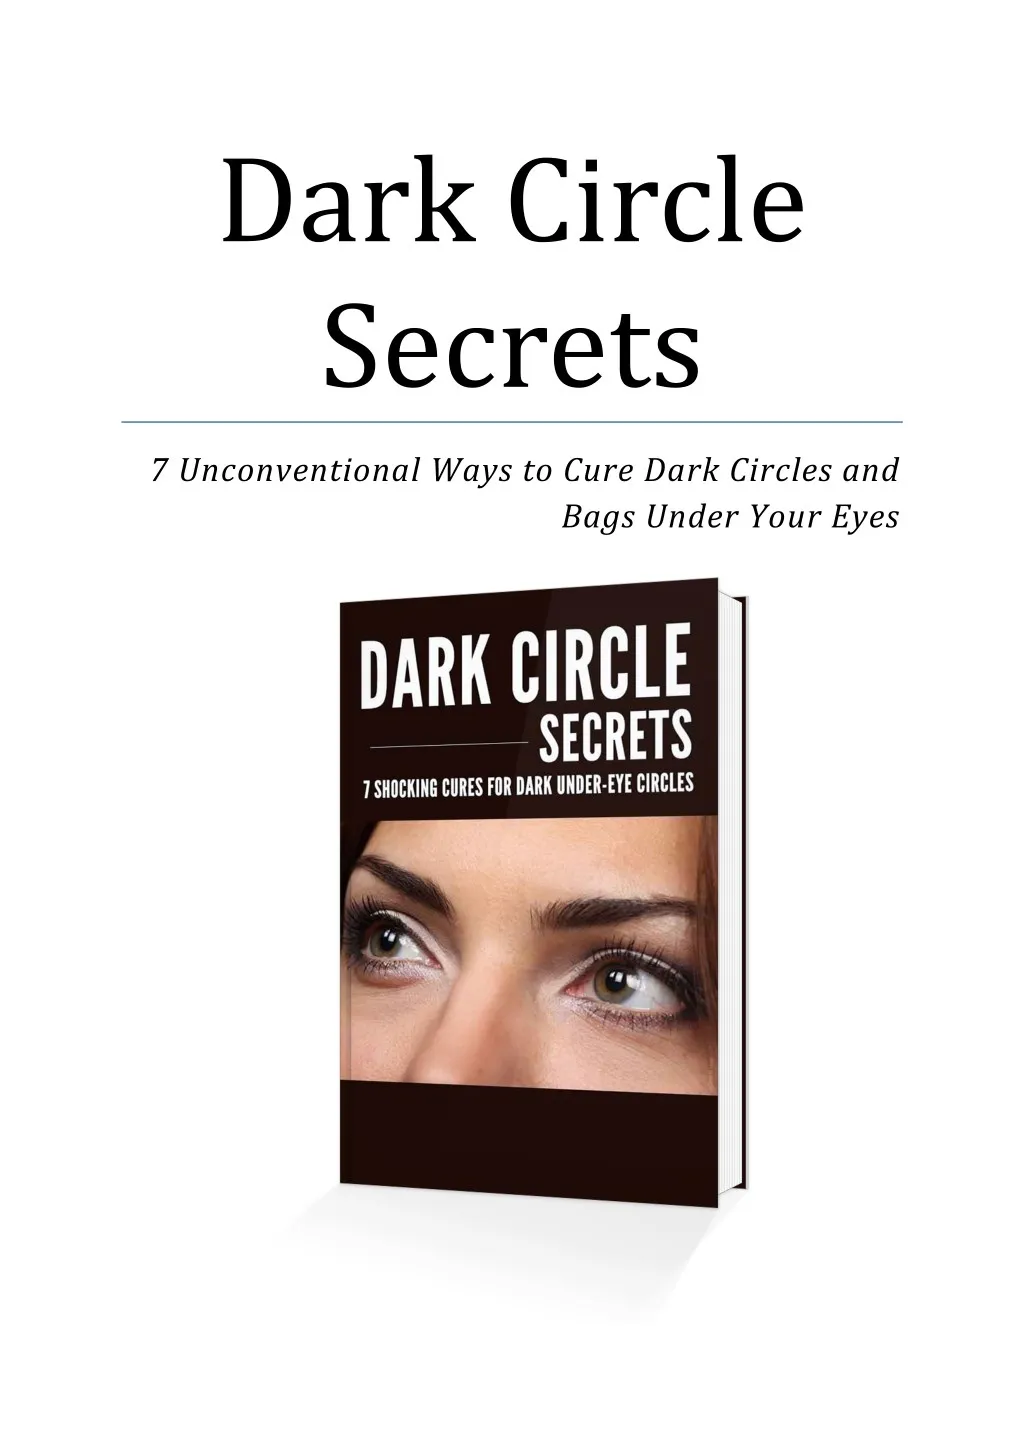 darkcircle secrets